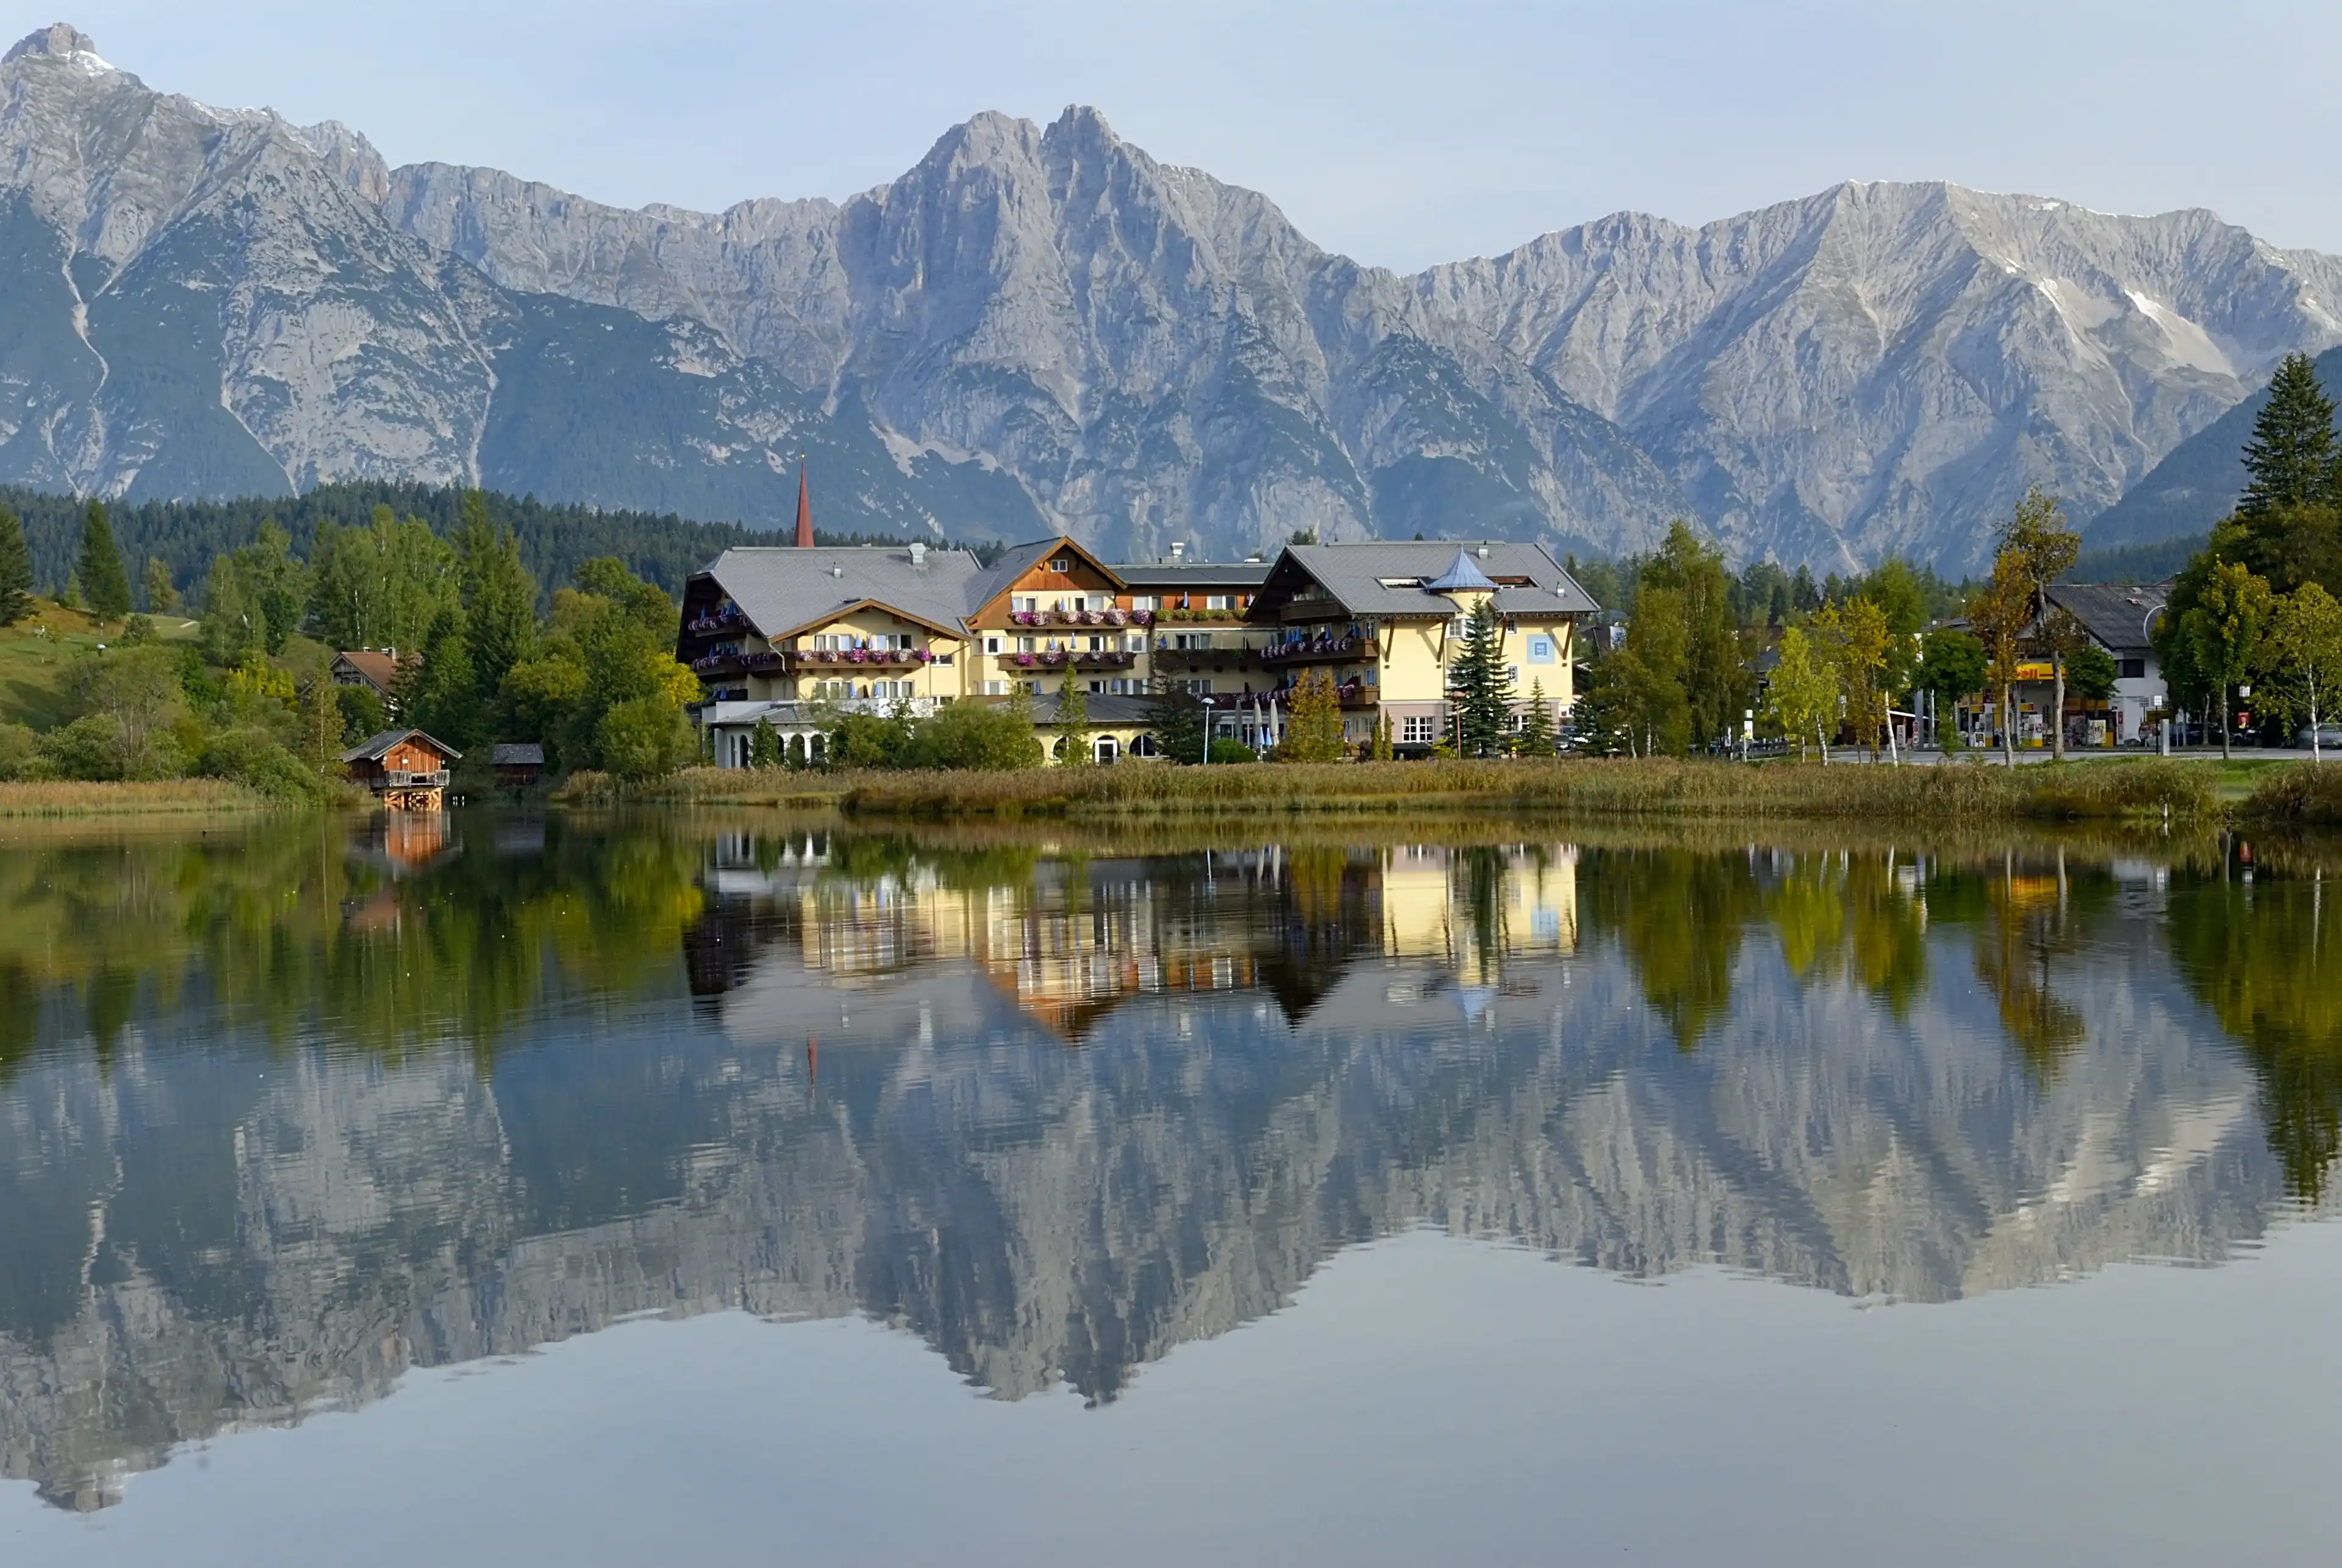 Tirol hotels. Best hotels in Tirol, Austria